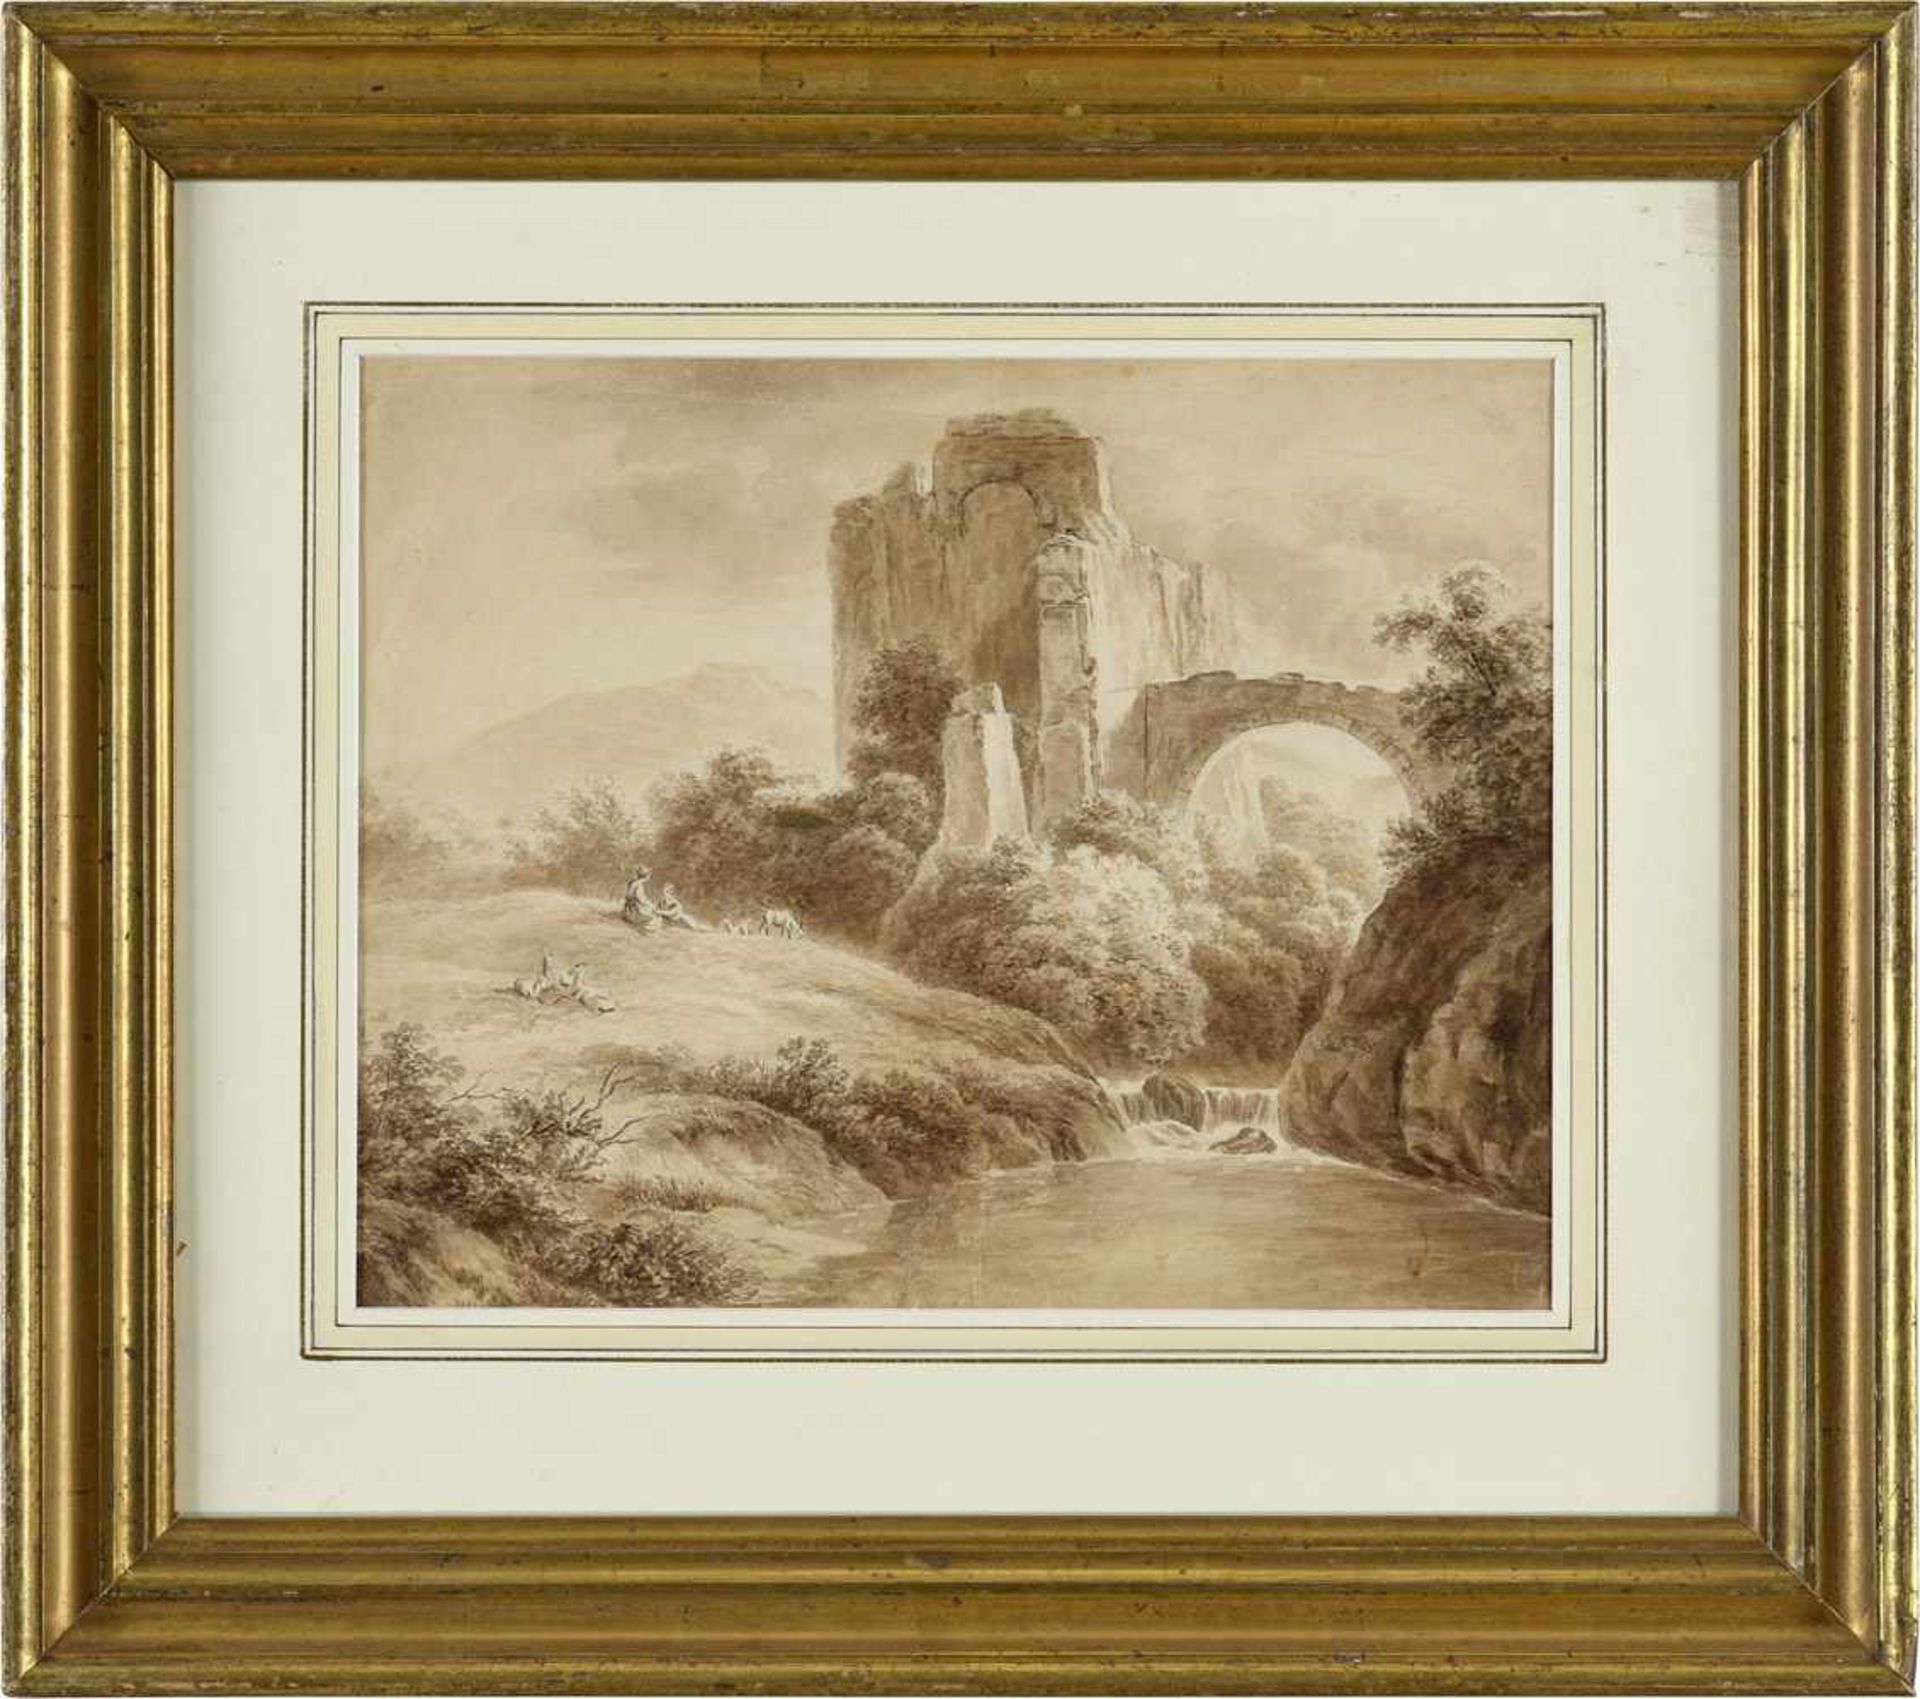 Unbekannter Meister Um 1800Ruinenlandschaft mit Wasserfall.Aquarell. 32 x 38 cm. - Bild 2 aus 2